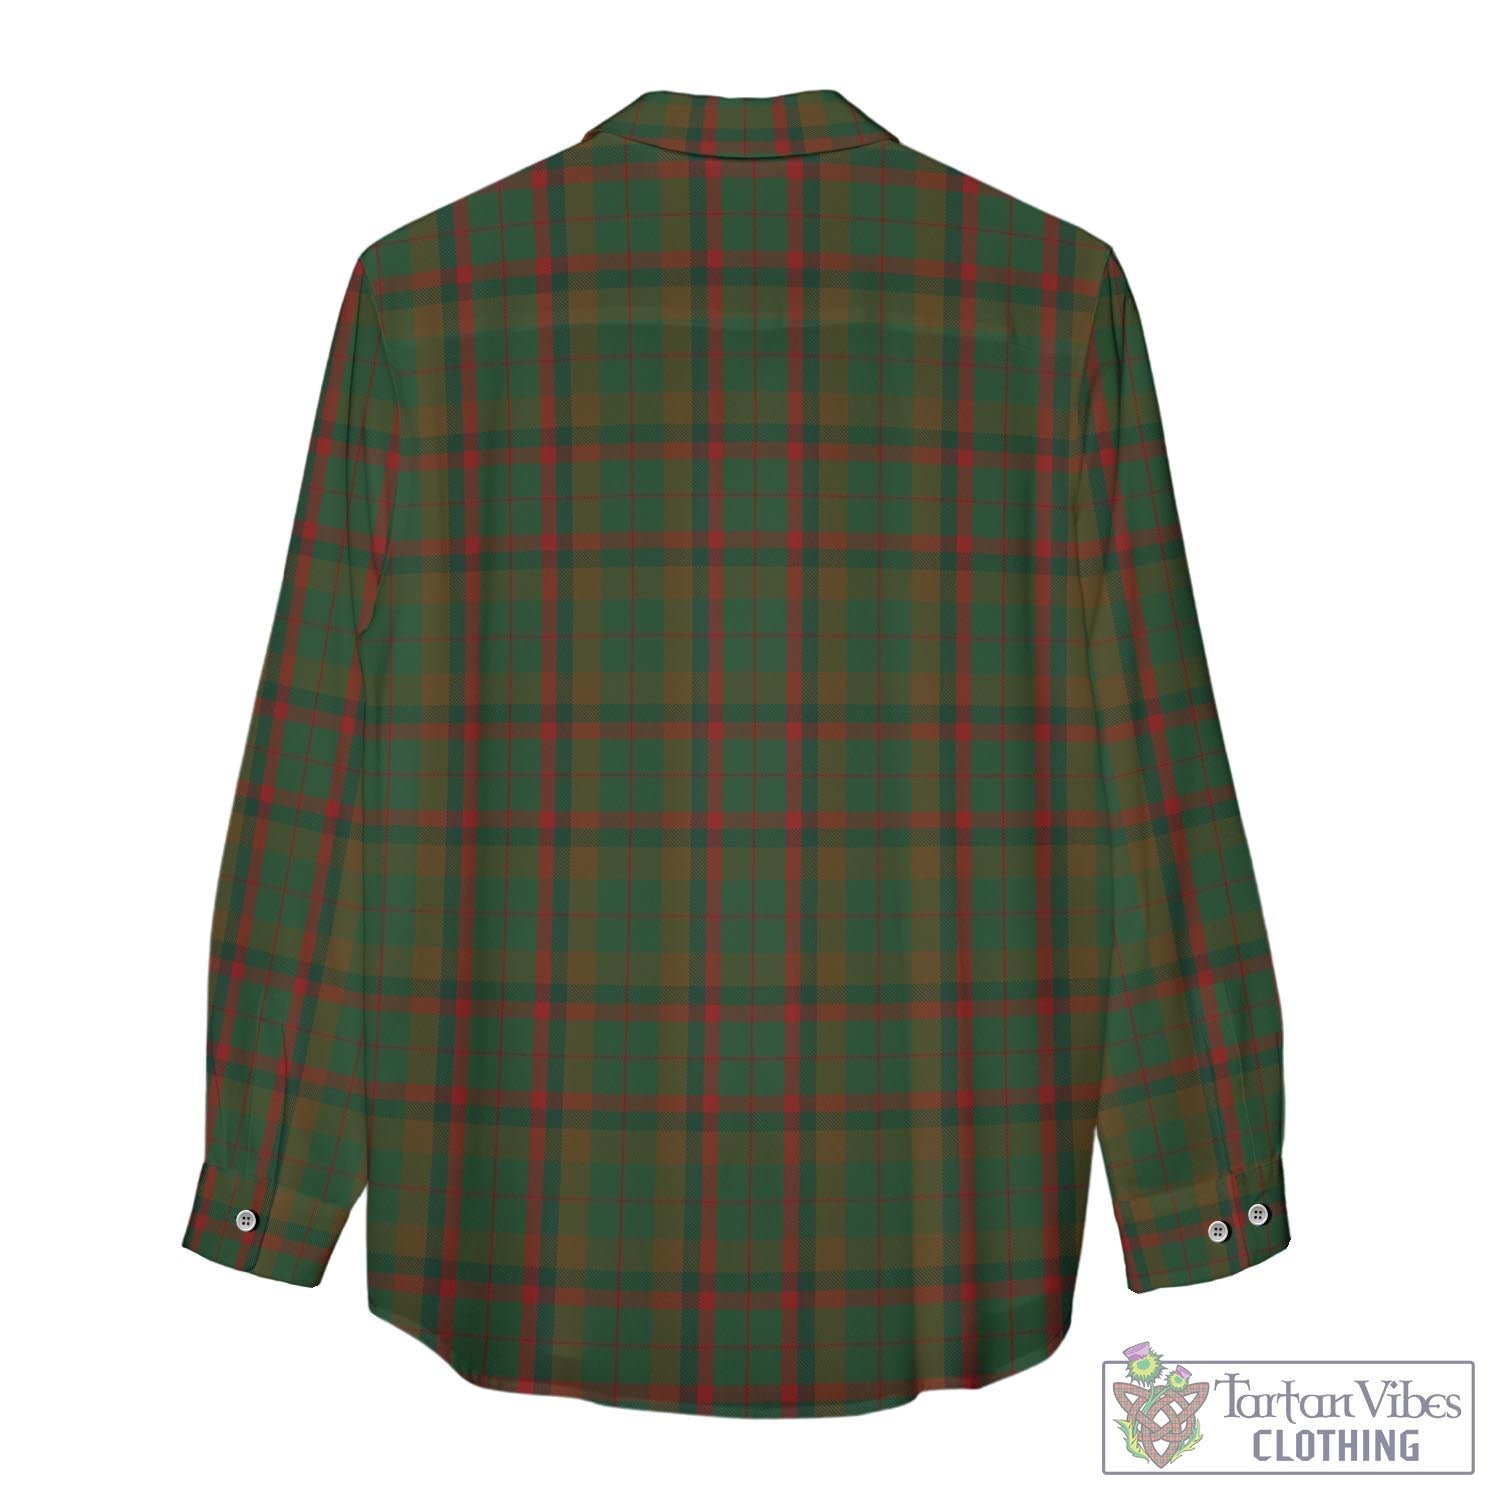 Tartan Vibes Clothing Macnaughton Hunting Tartan Womens Casual Shirt with Family Crest